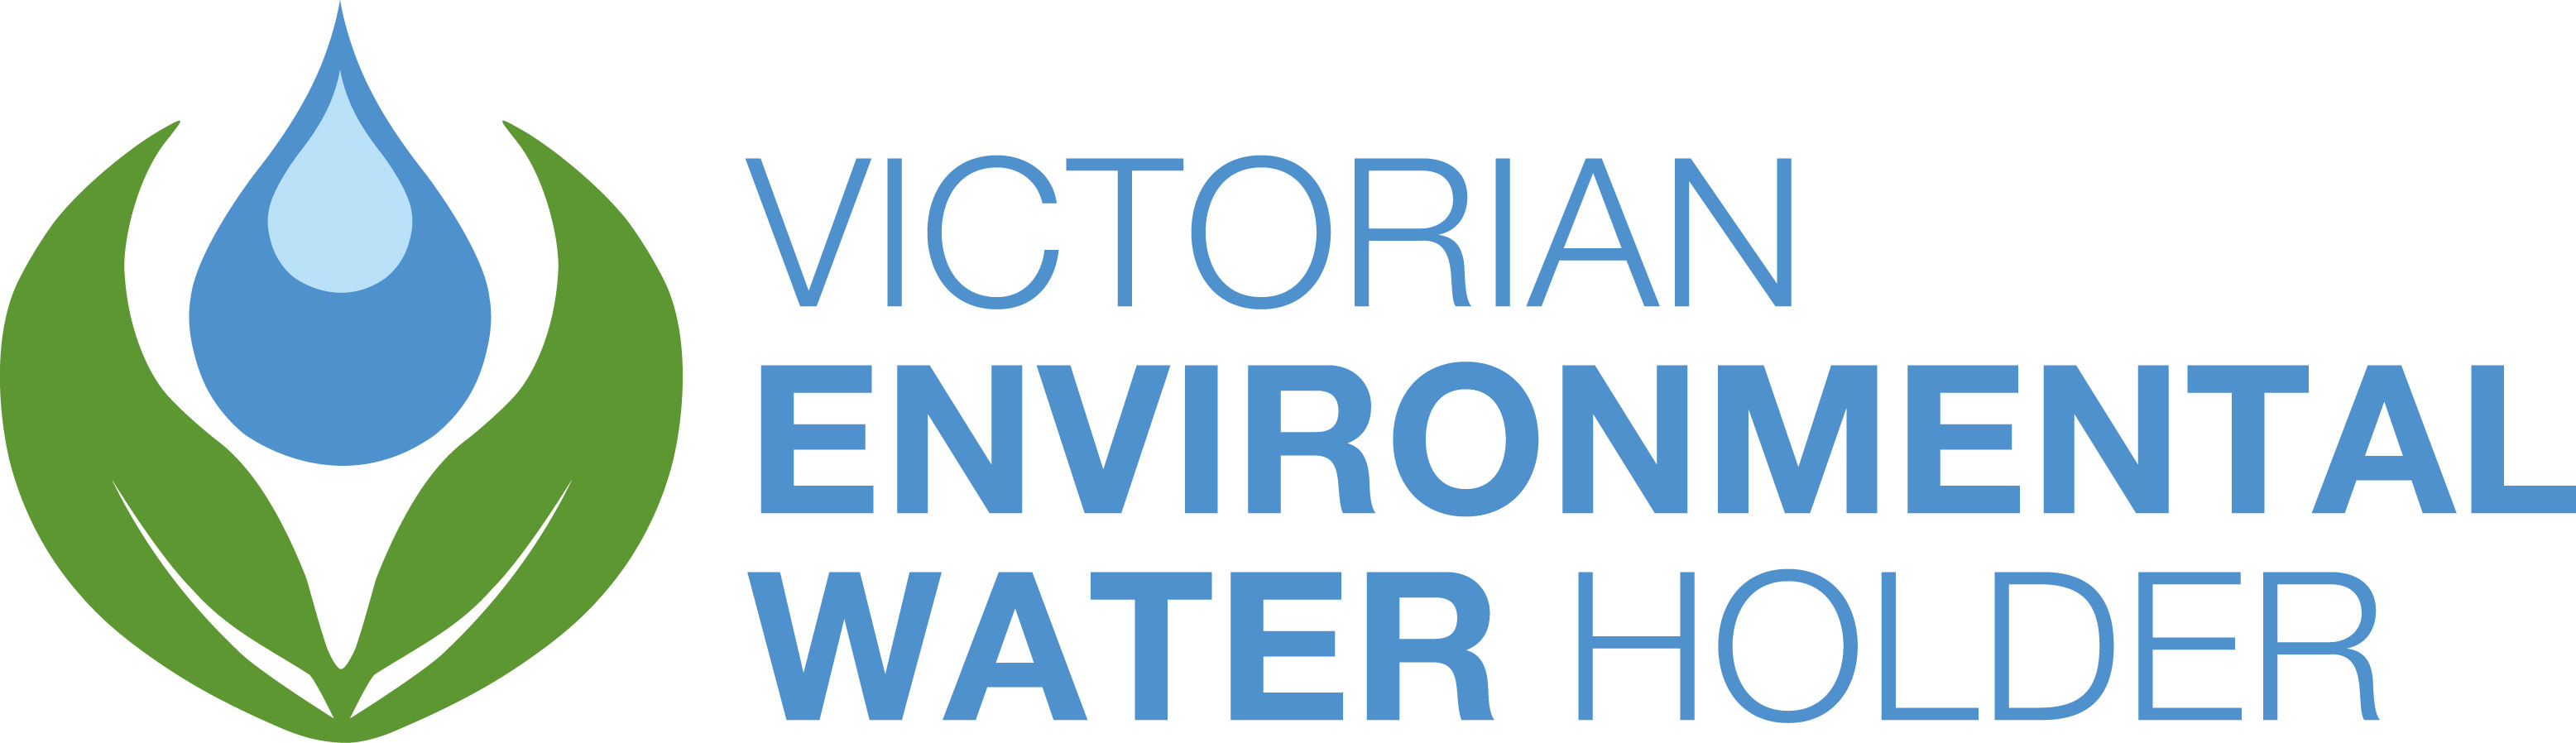 NRMjobs - 20009591 - Environmental Water Coordinator with the Victorian Environmental Water Holder (2 positions)